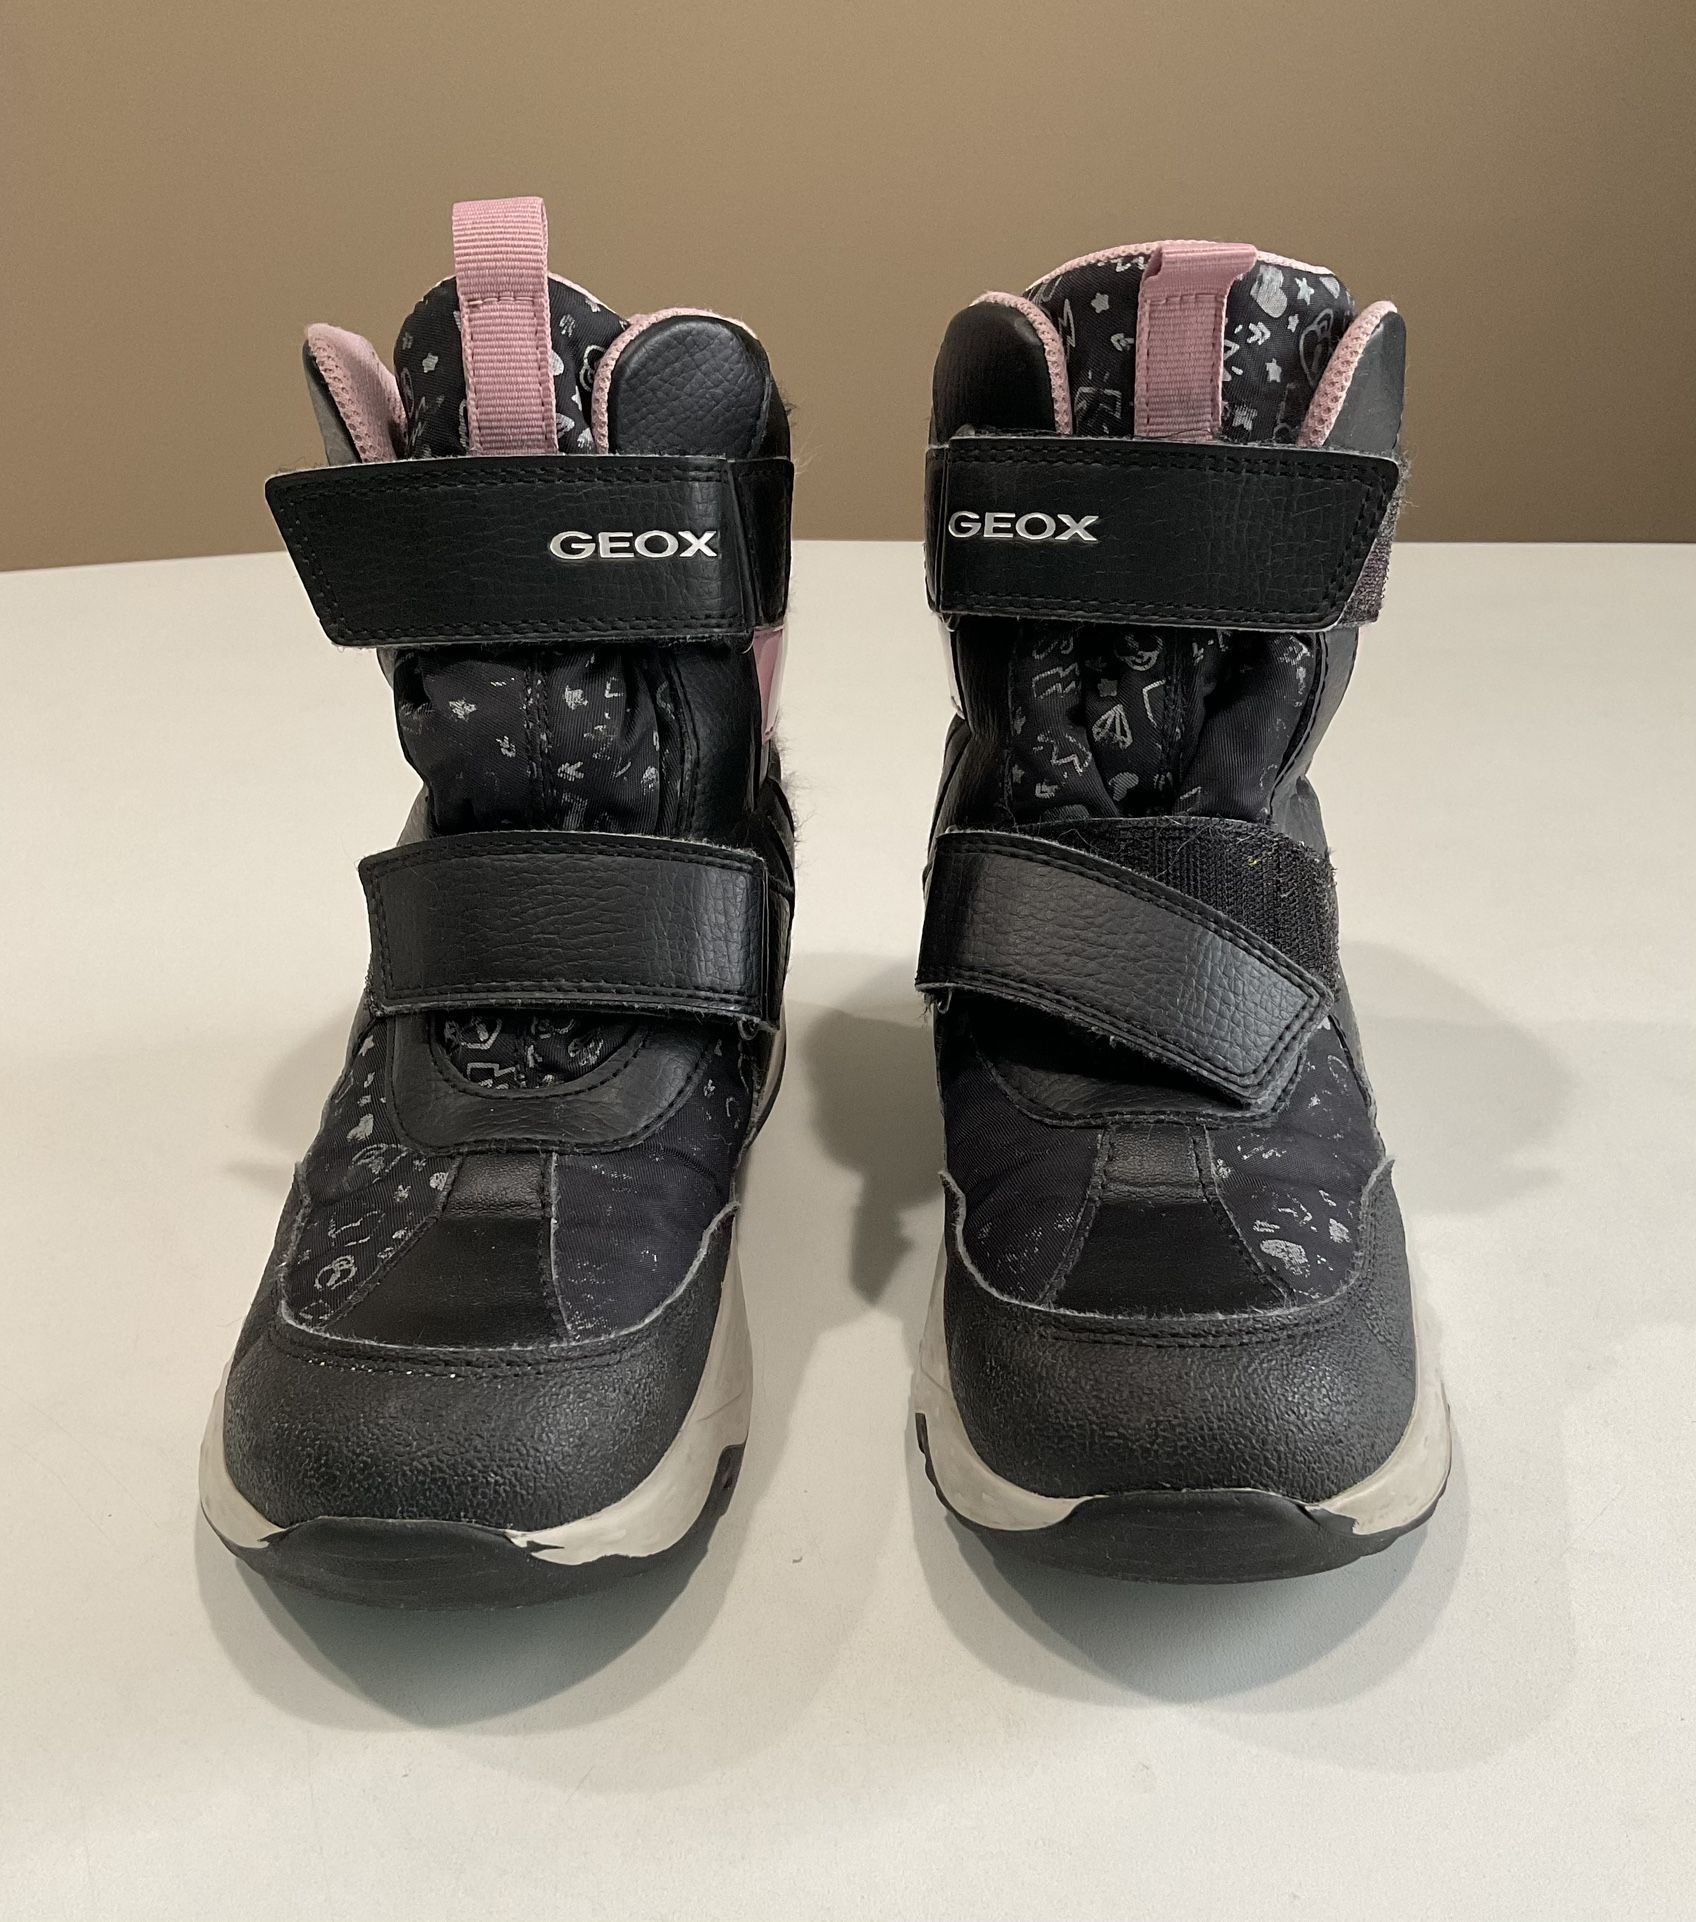 GEOX Respira Girl’s Waterproof Black/Pink Warm Winter Boots, Size 3.5